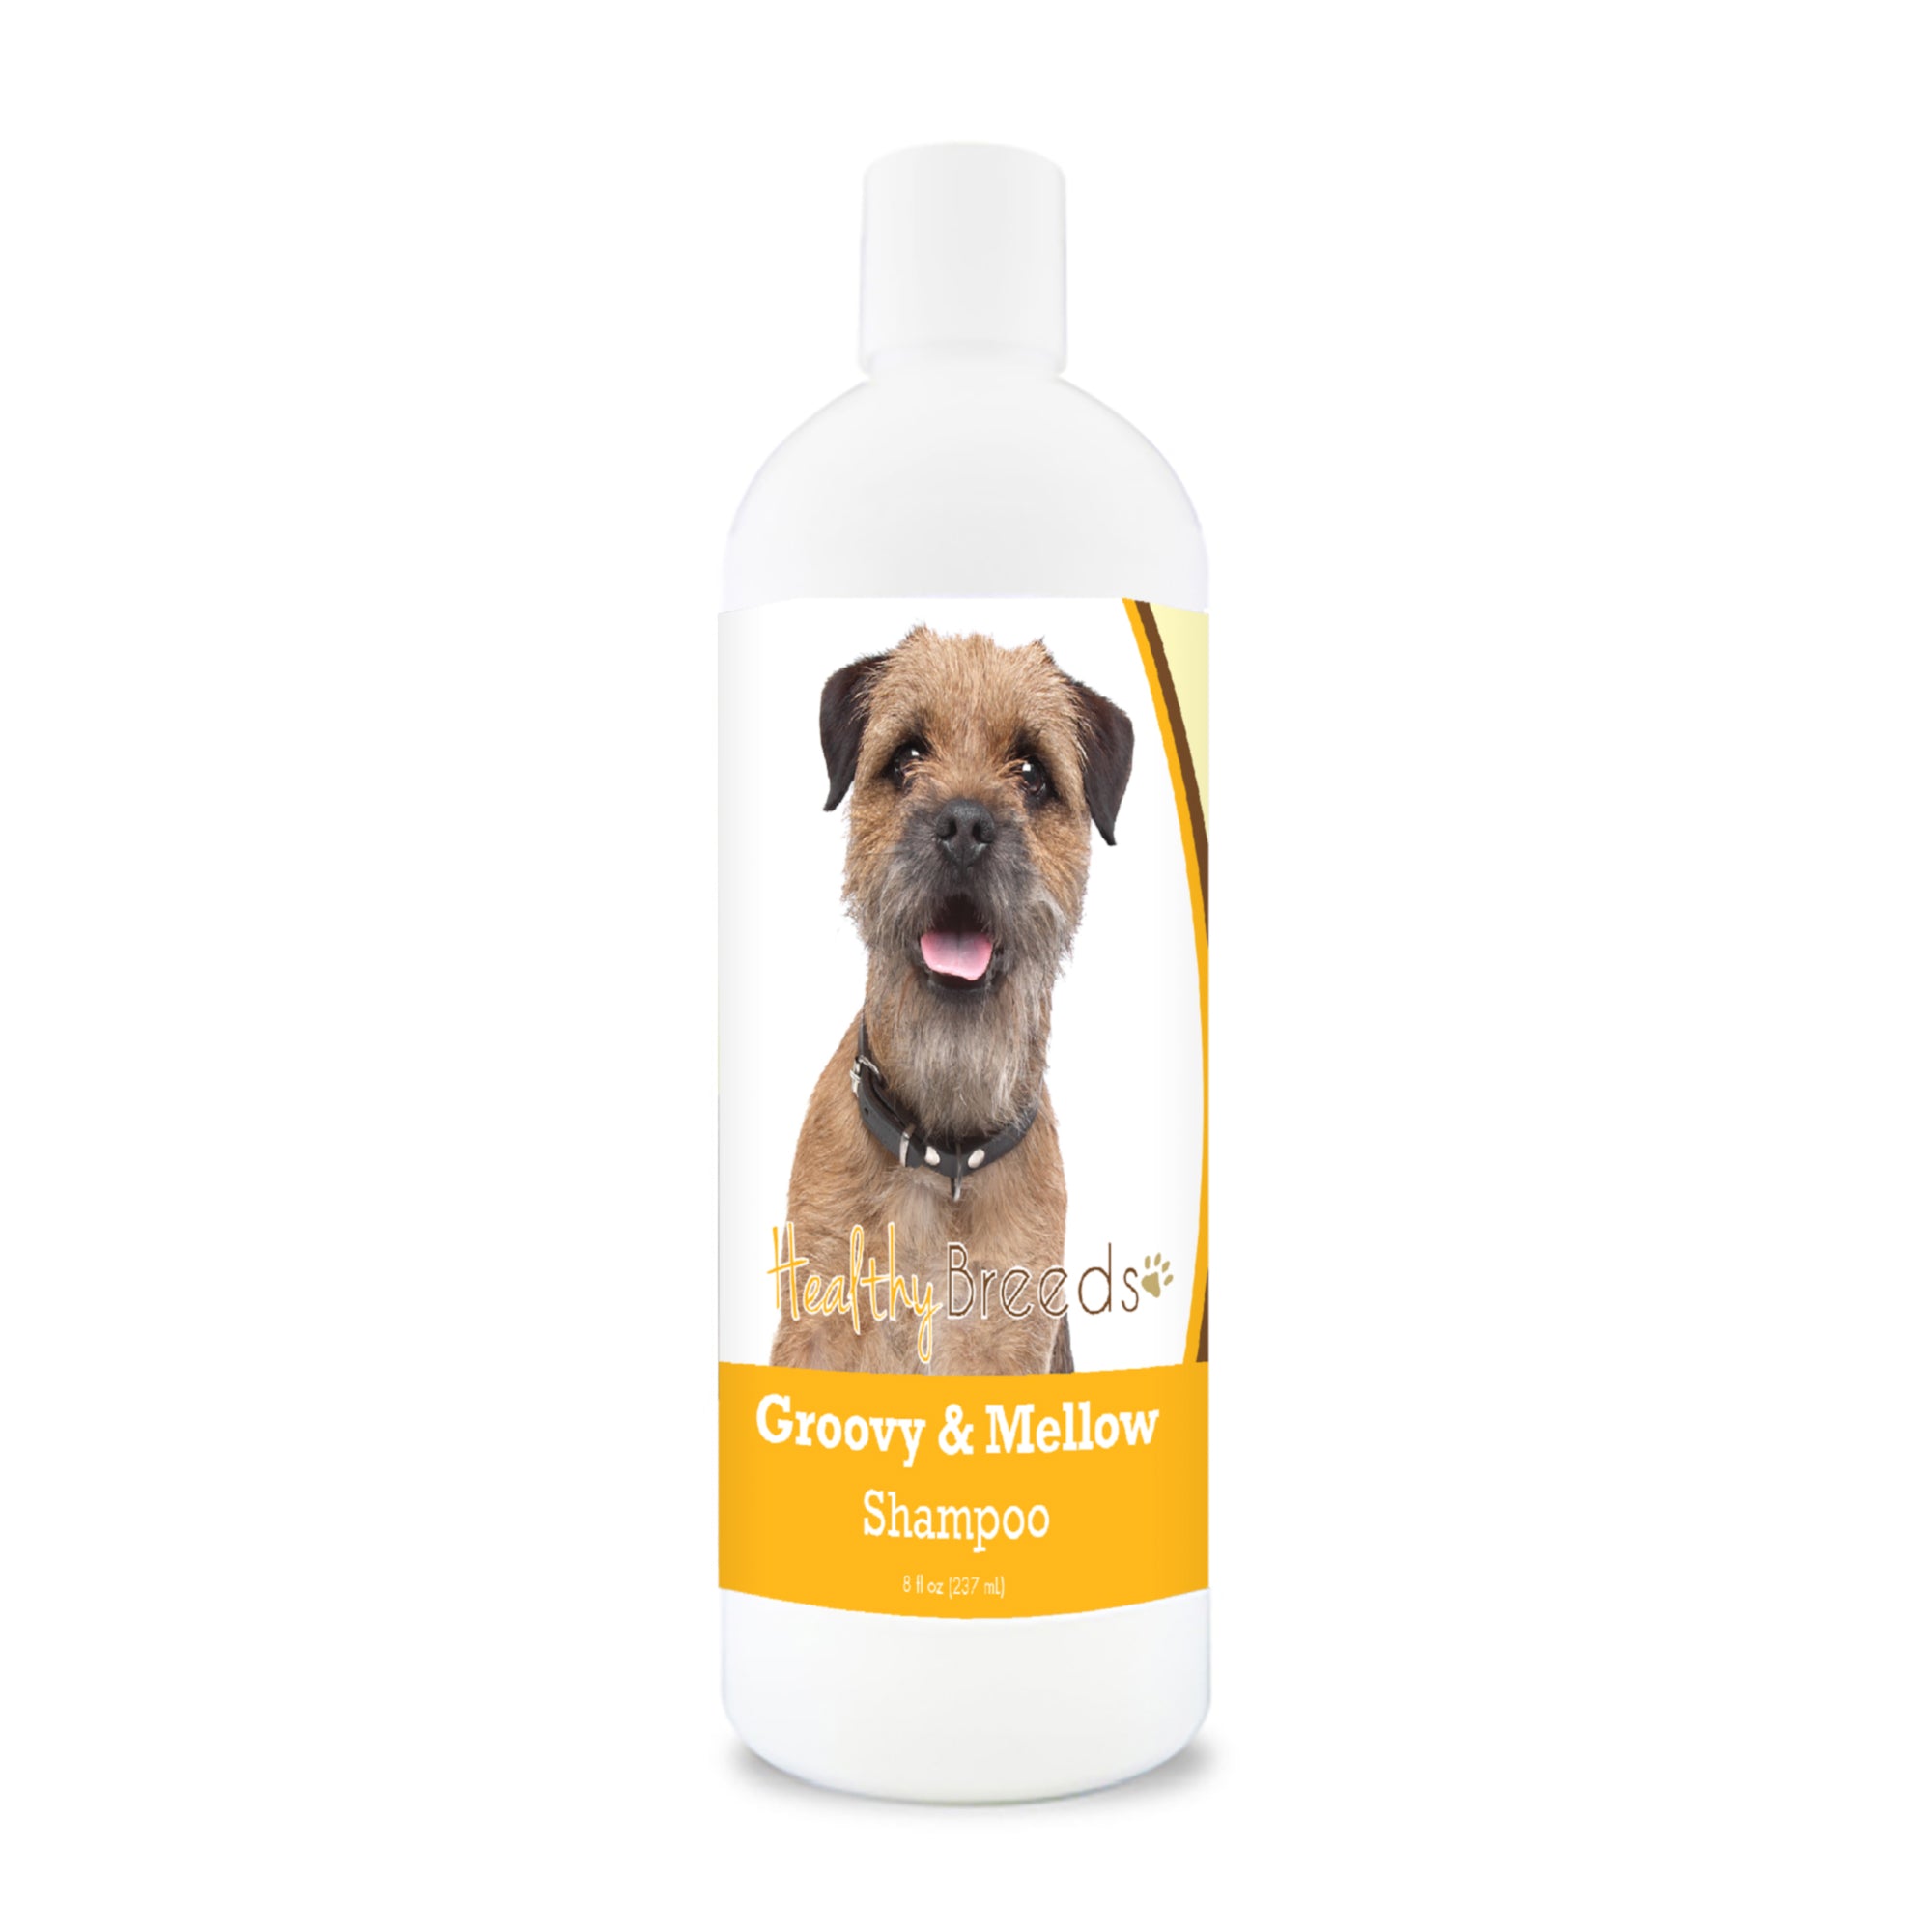 Border Terrier Groovy & Mellow Shampoo 8 oz